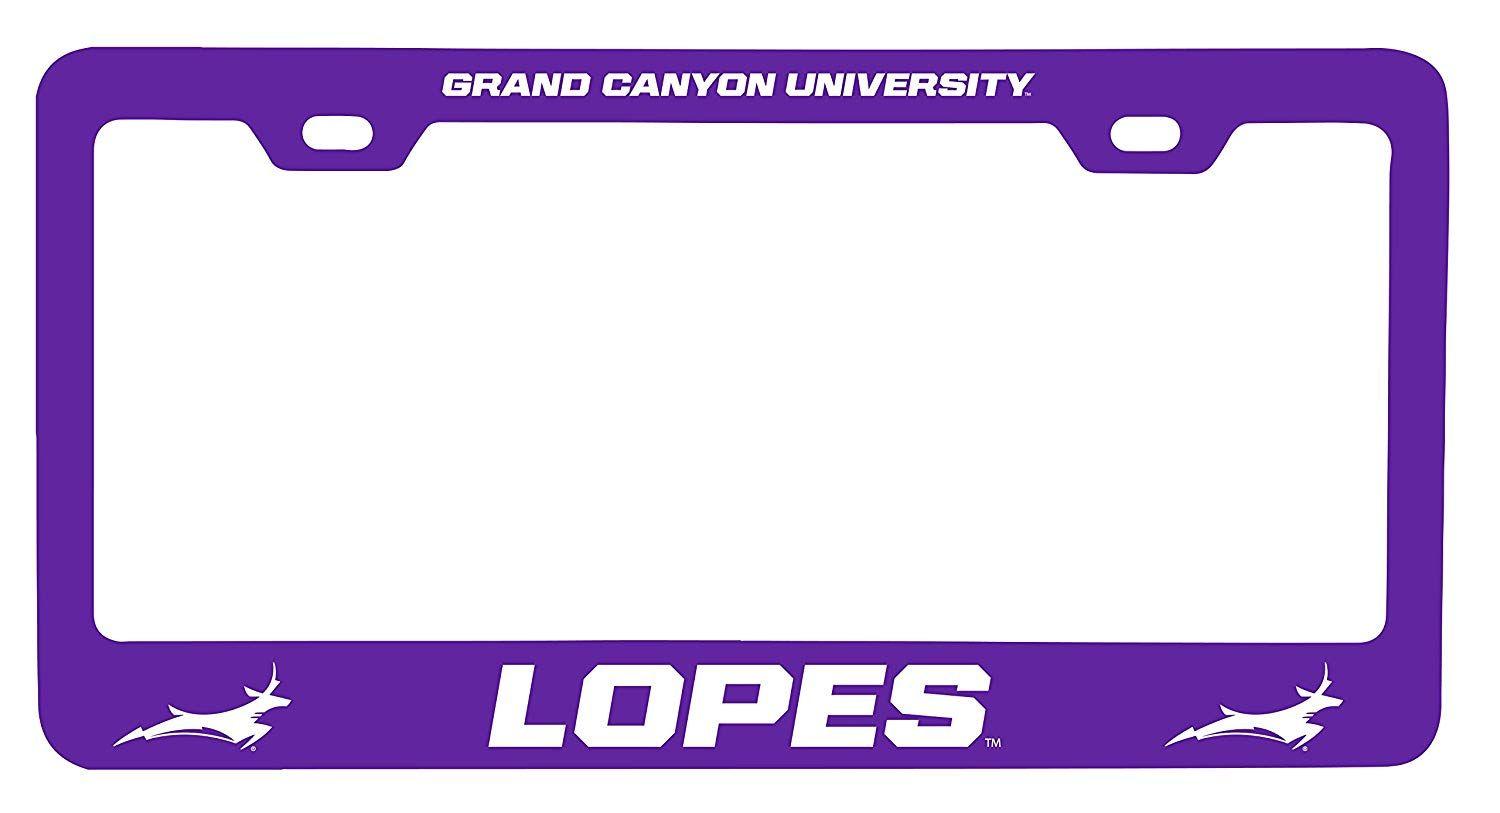 Grand Canyon University Lopes Logo - Amazon.com : Grand Canyon University Lopes License Plate Frame ...